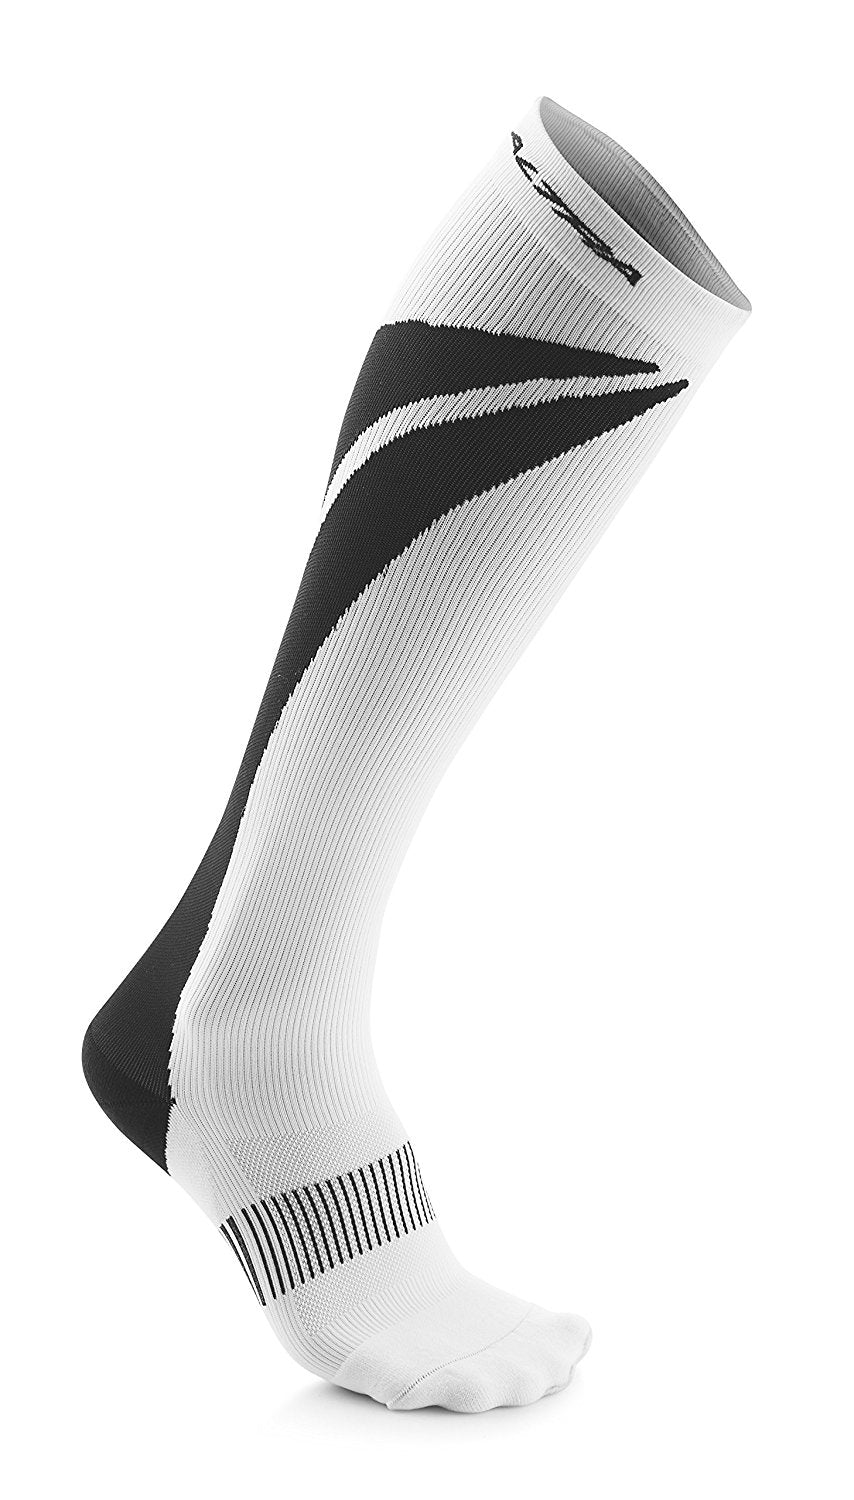 Altra Maximum 1.0 Light Anatomical Compression Socks, White/Black